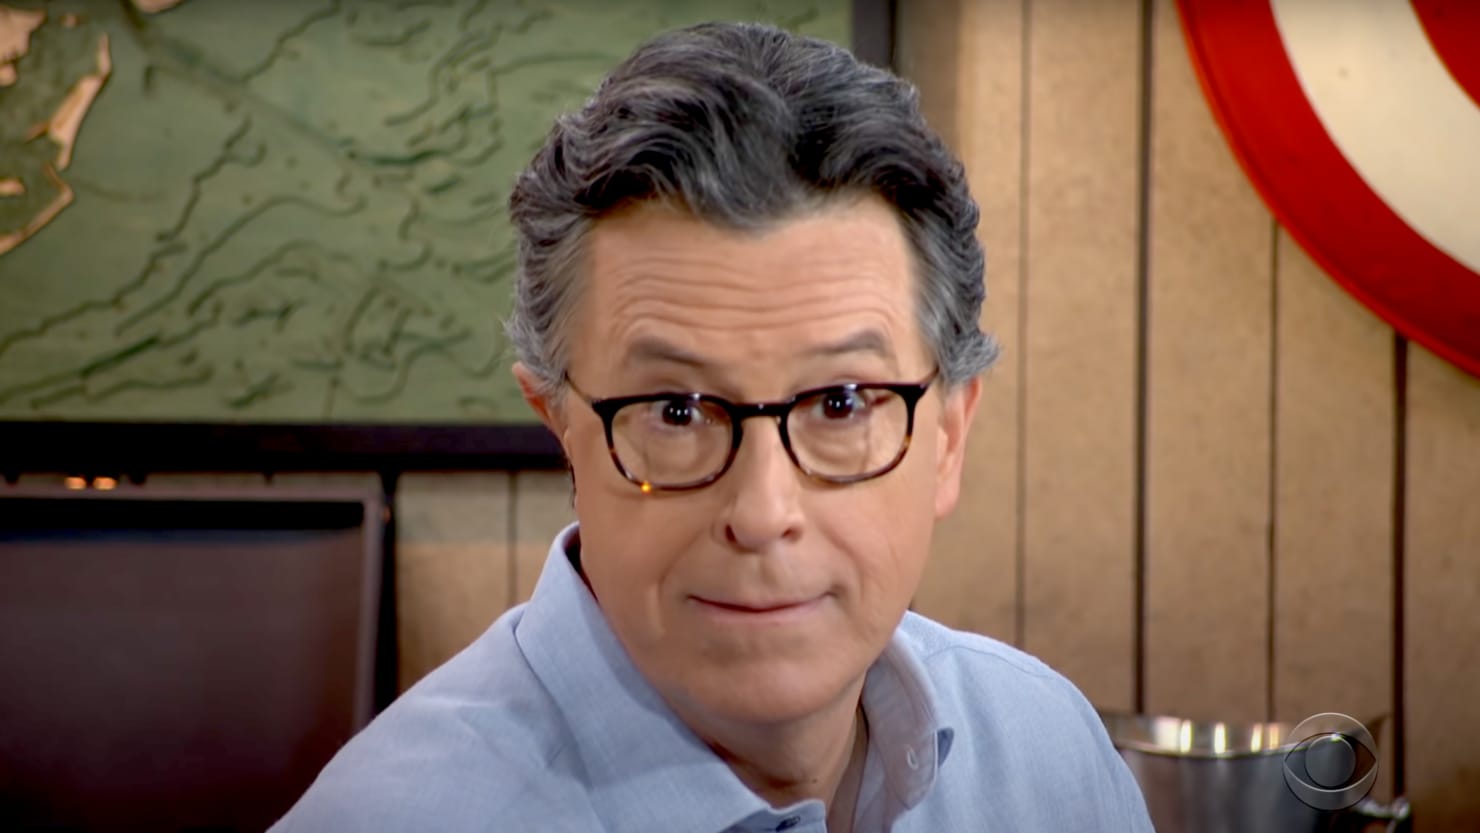 Stephen Colbert defends Meghan Markle, Jeffrey Epstein Ties of Slams of the British royals